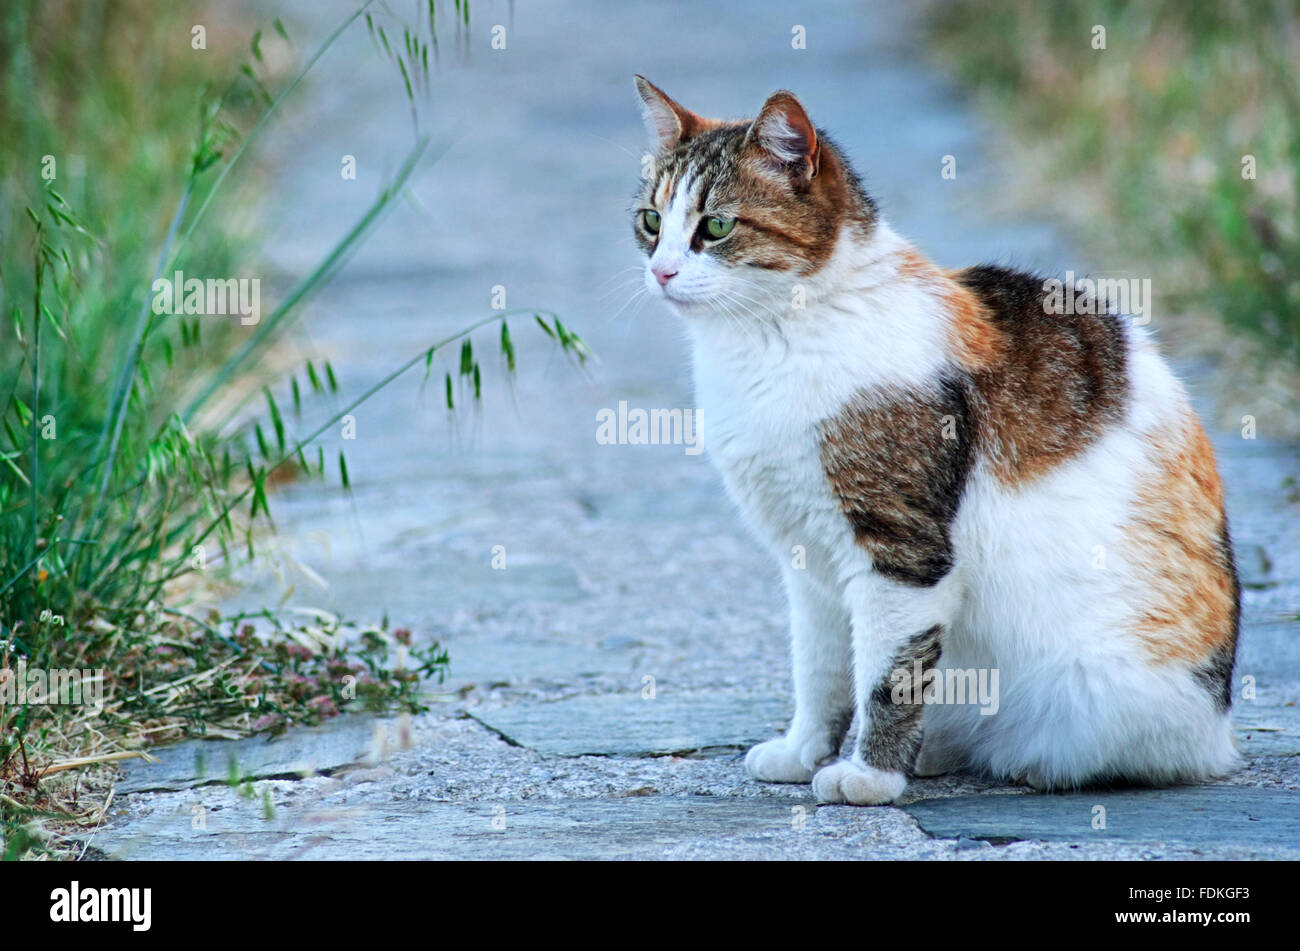 Calico cat sitting outdoors Stock Photo